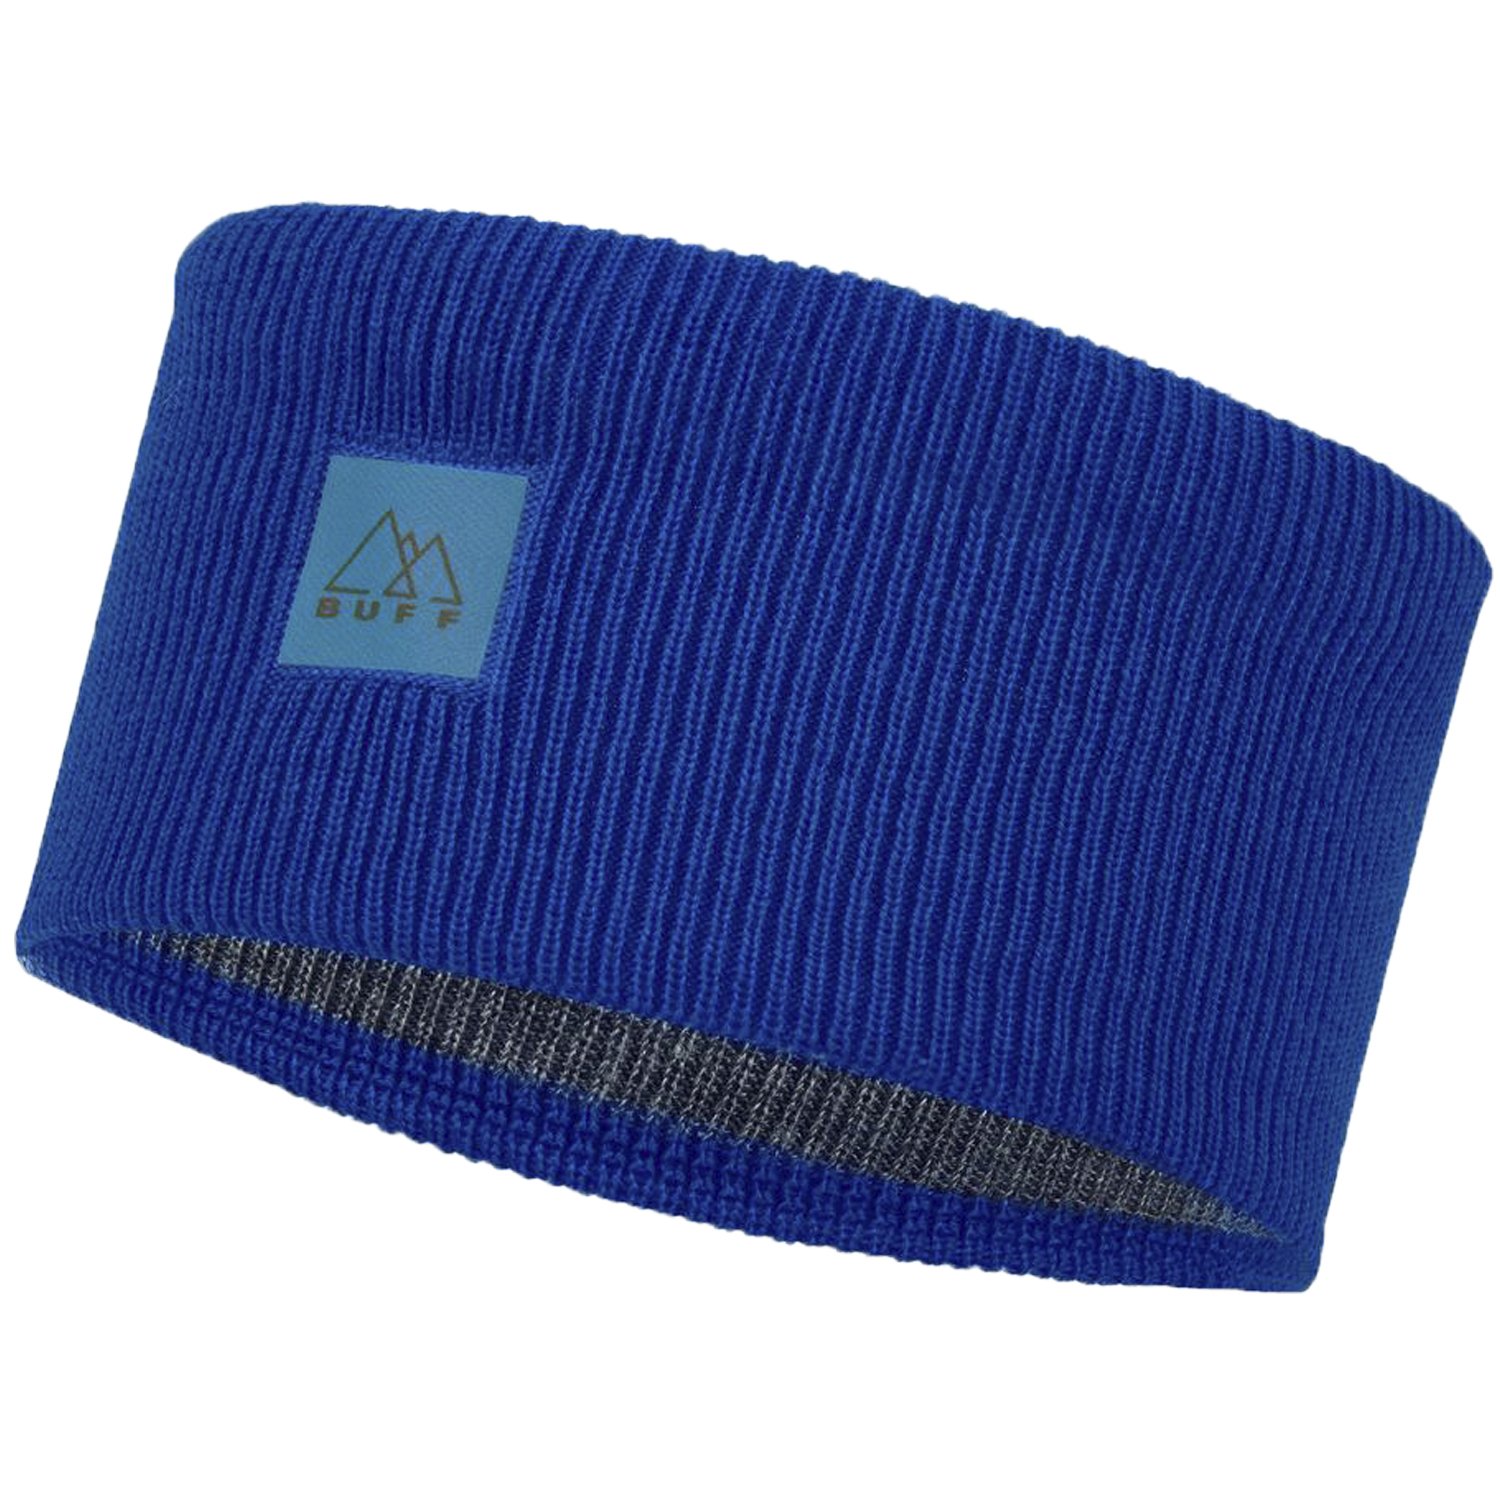 Повязка Buff Crossknit Headband Solid Azure Blue, 126484.720.10.00 купить на ЖДБЗ.ру - фотография № 1